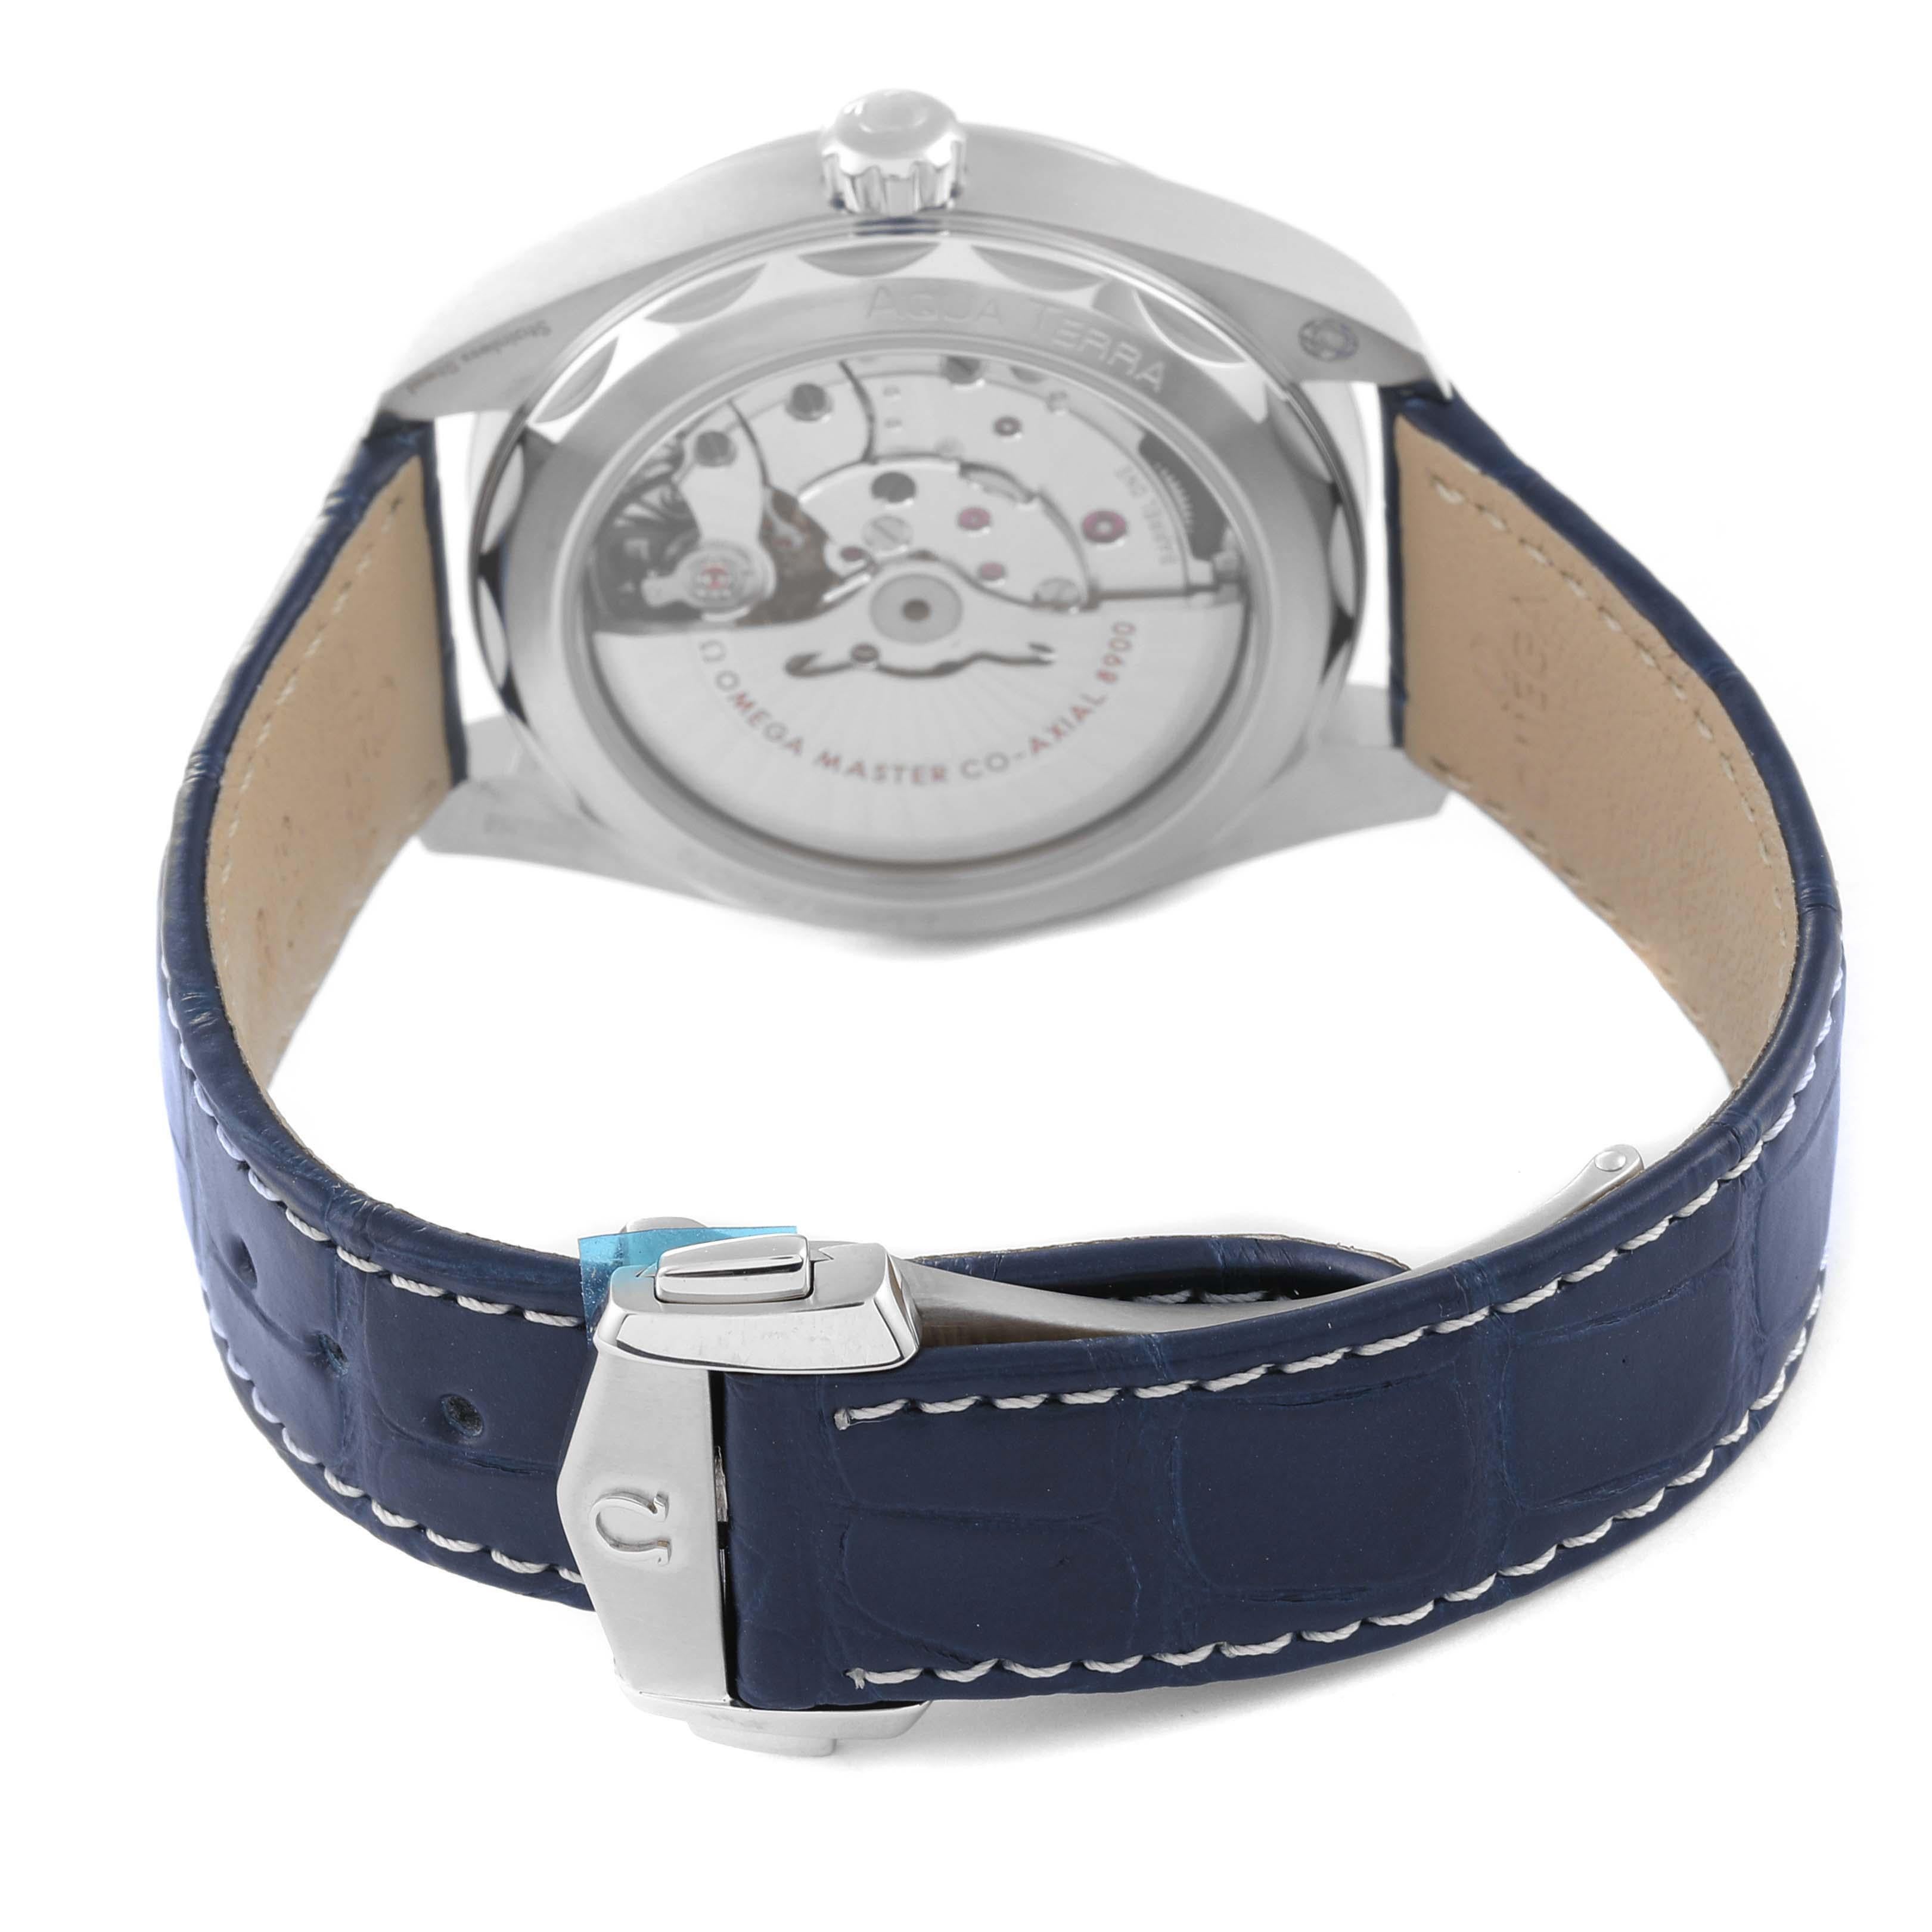 Omega Seamaster Aqua Terra Blue Dial Mens Watch 220.13.41.21.03.002 Unworn For Sale 3